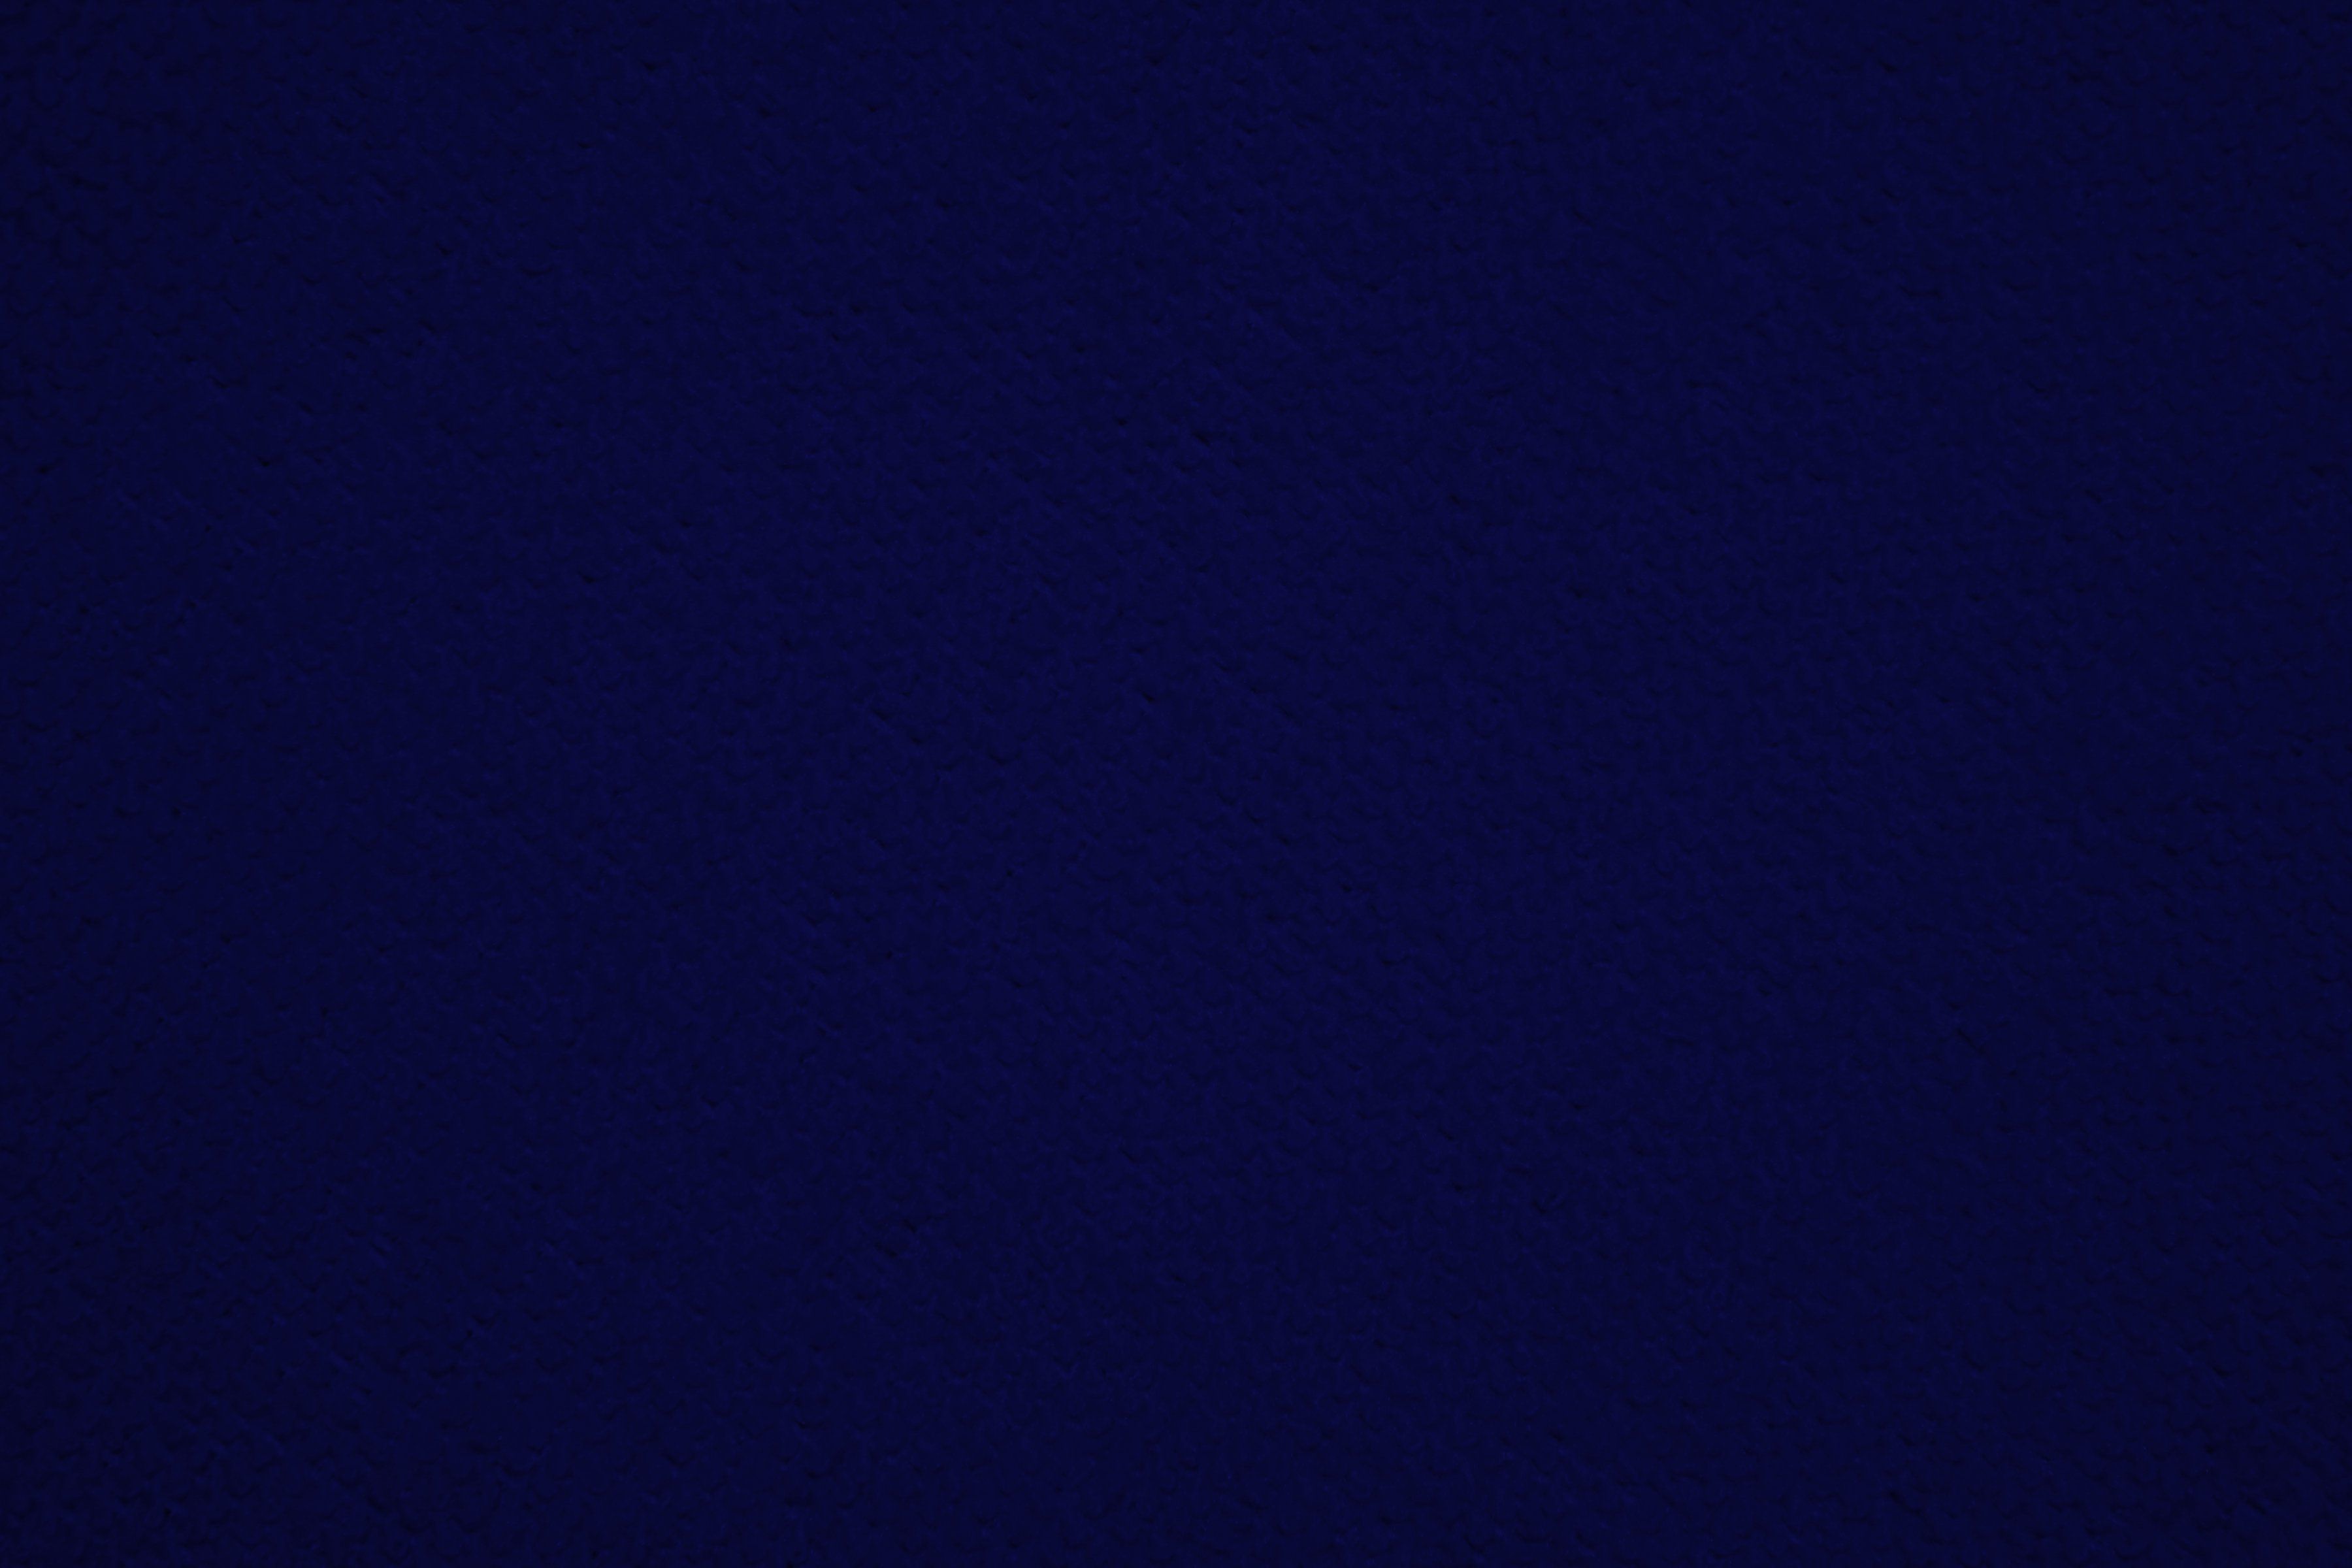 HD wallpaper, Blue, Navy, Wallpaper